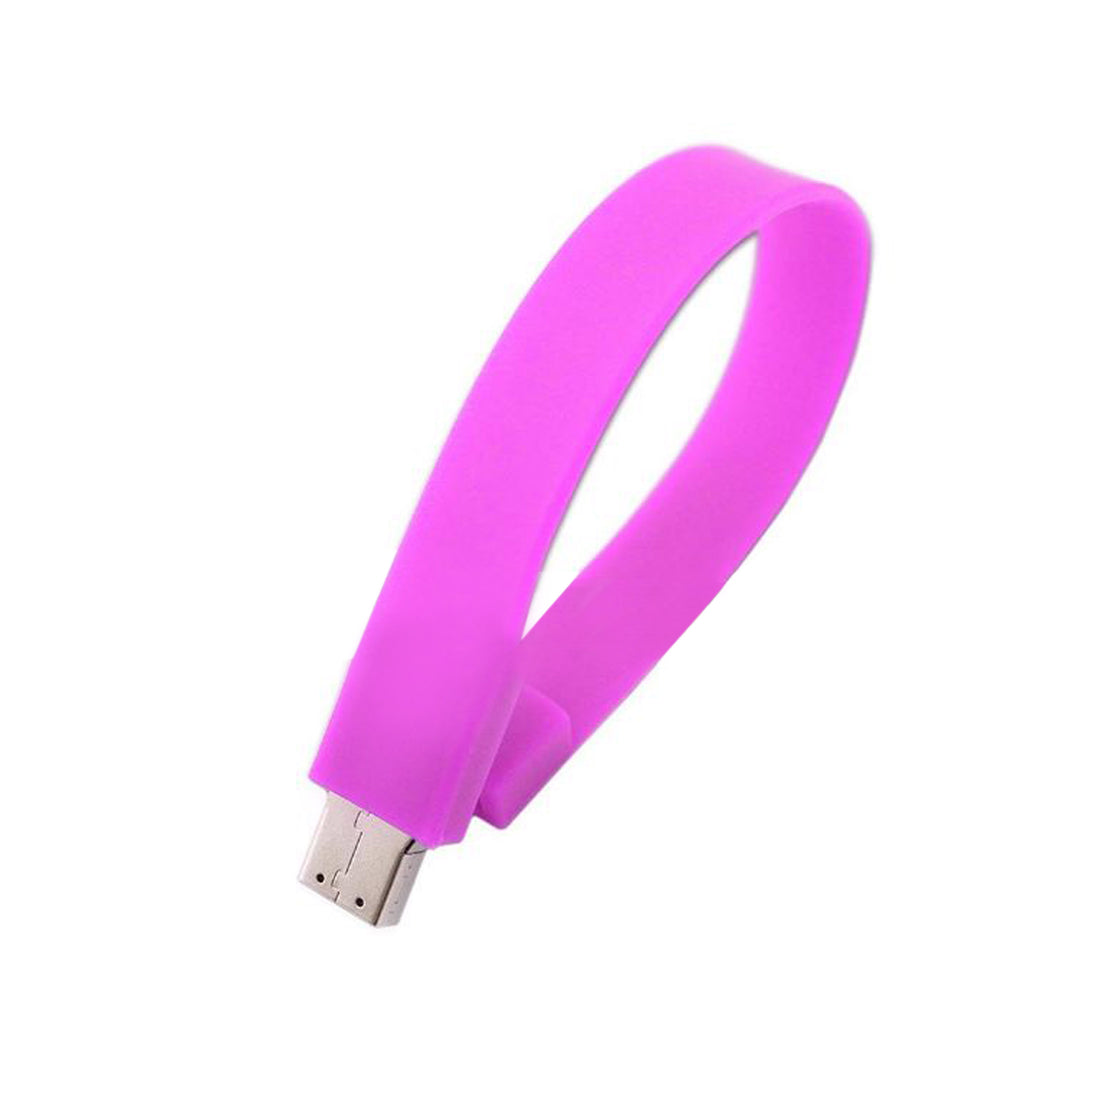 Fashion Silicone Bracelet Band USB Flash Drive 4gb - Blue, Orange, Pink or Purple